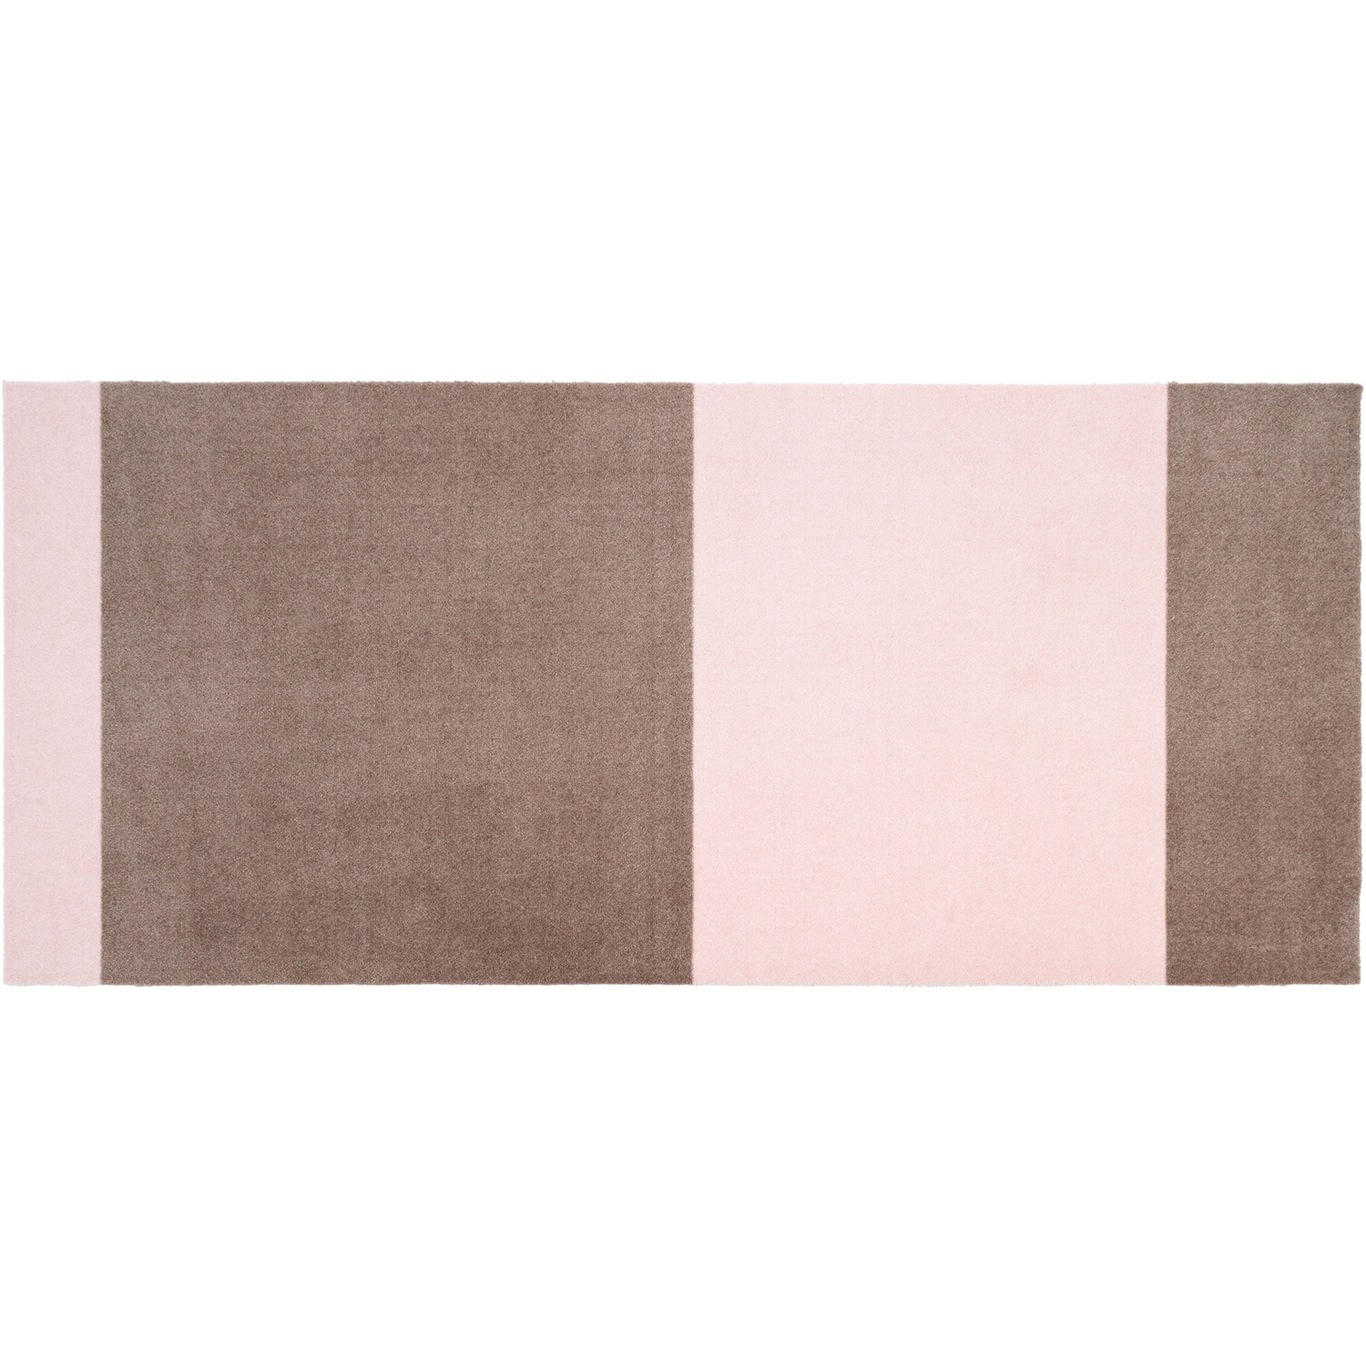 Stripes Teppich Sandfarben/Light Rose, 90x200 cm